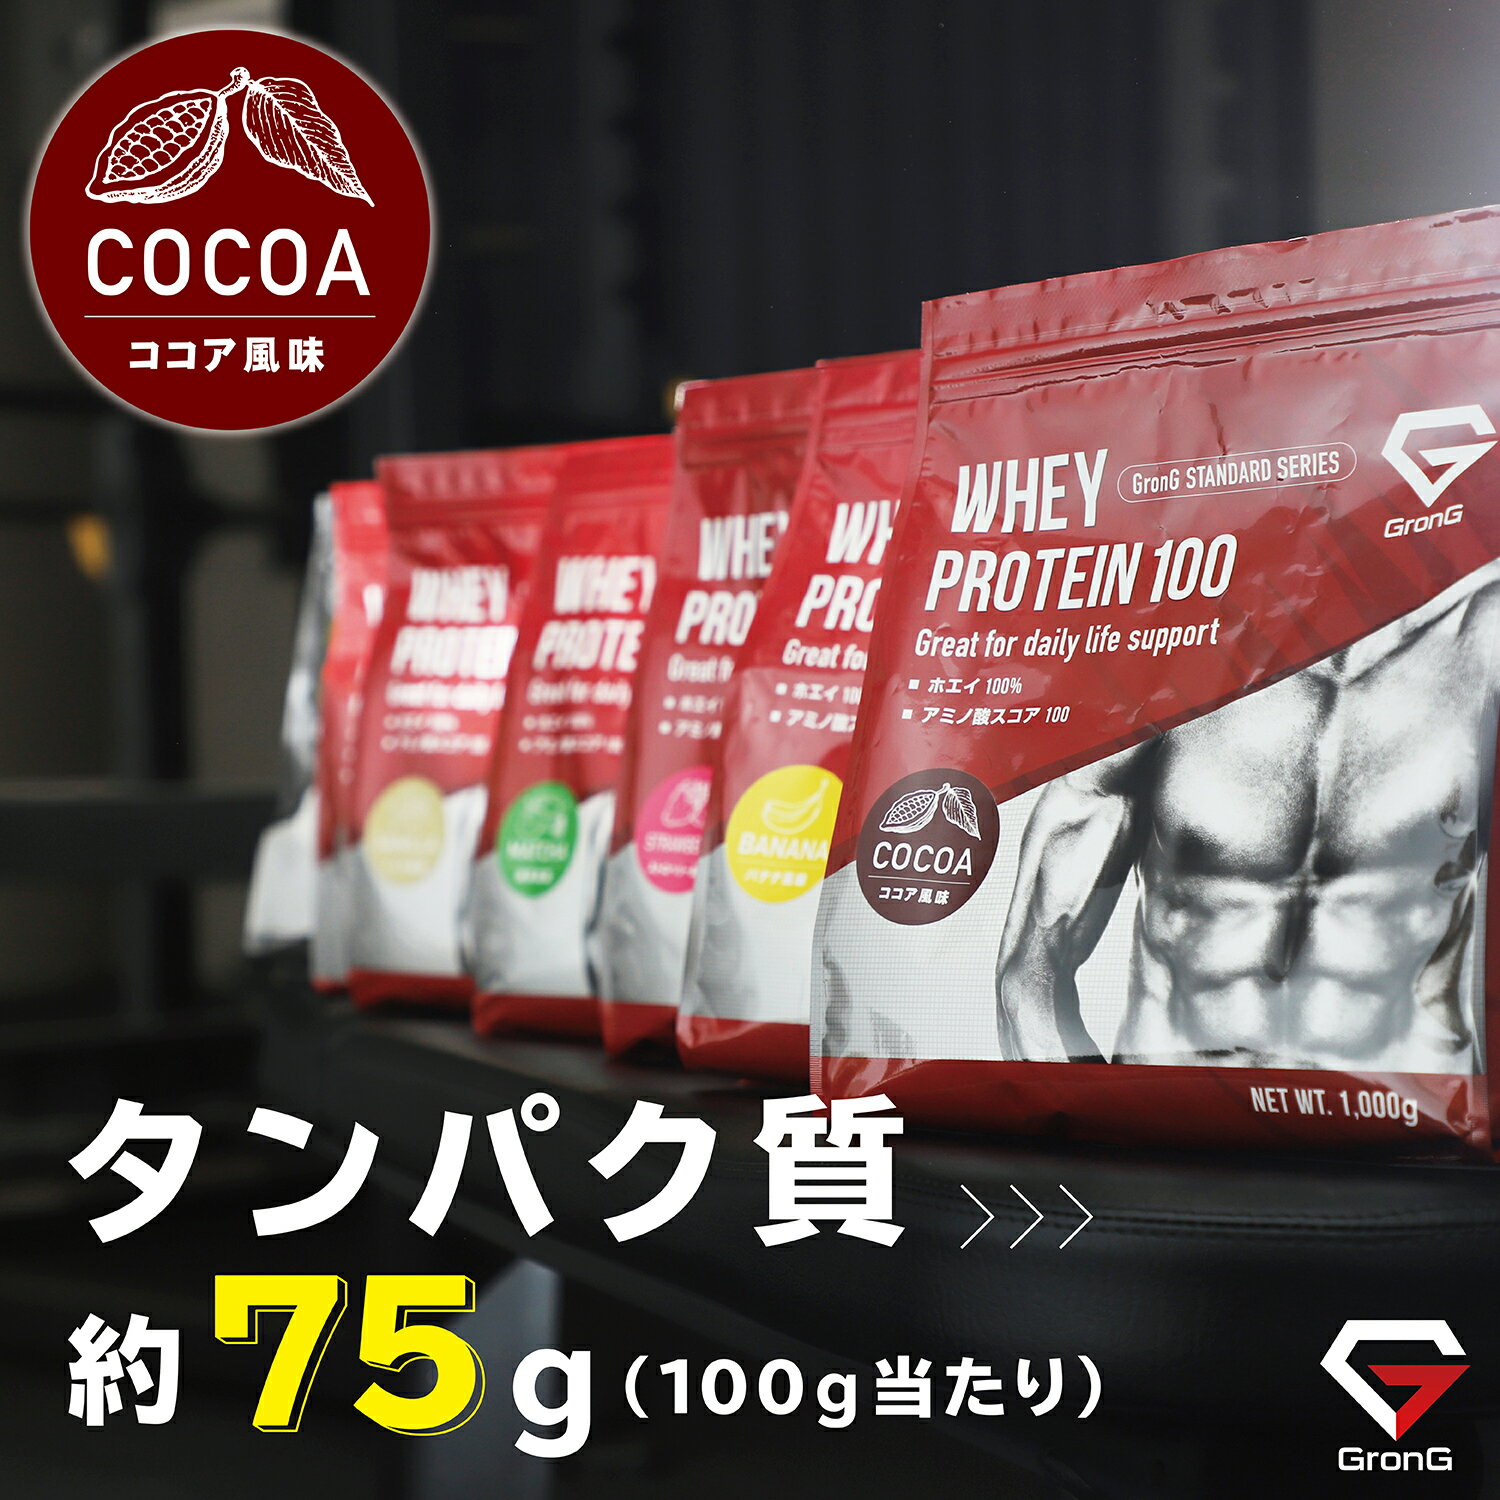 GronG(グロング) プロテイン 1kg ココア風味 ホエイプロテイン100 国産 おきかえダイエット 筋トレ トレーニング